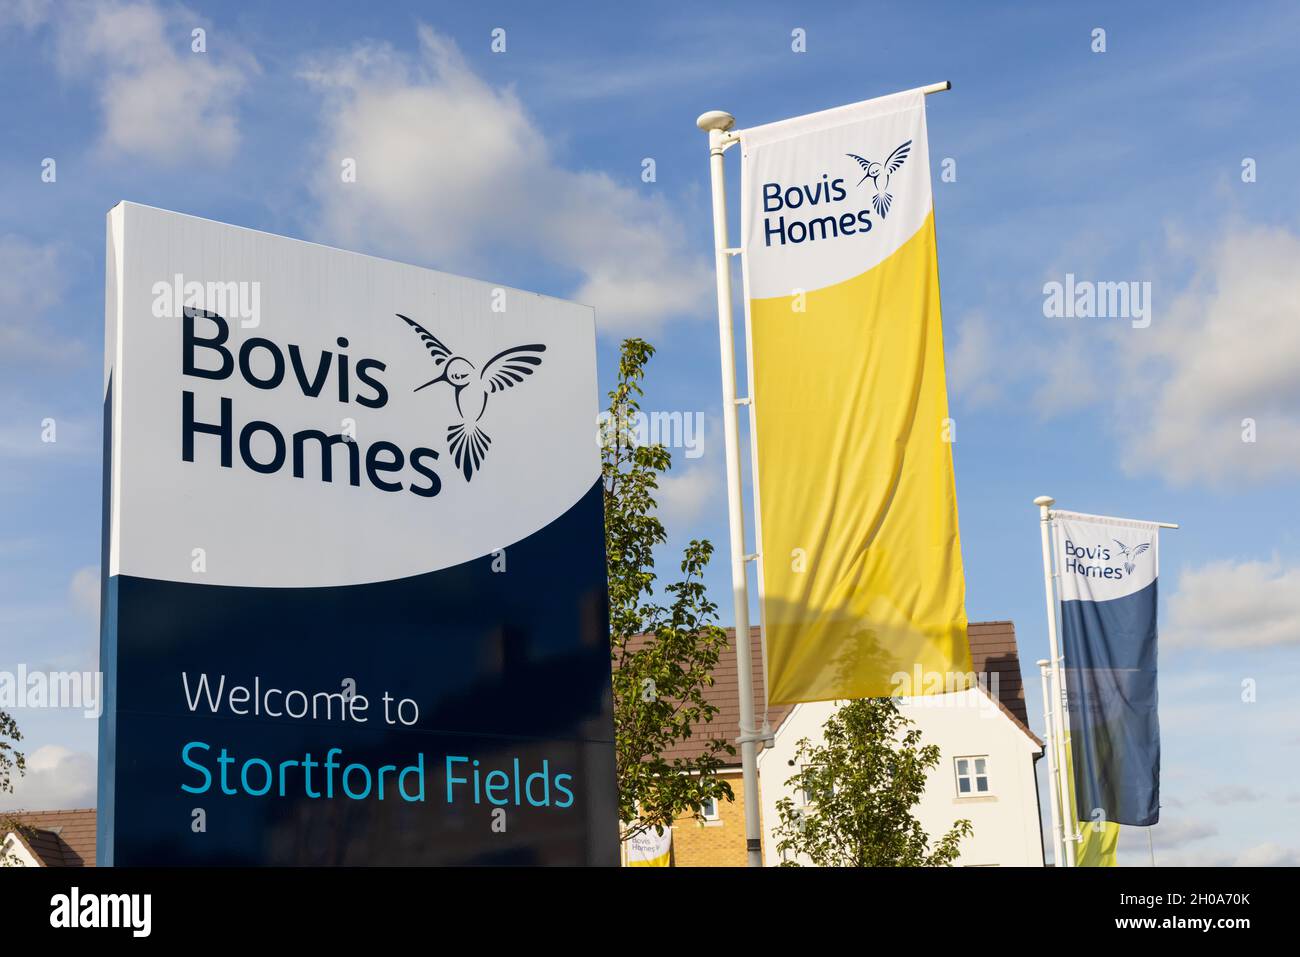 Bovis Homes sign and flags in the Stortford Fields housing development. Bishop's Stortford, hertfordshire. UK Stock Photo